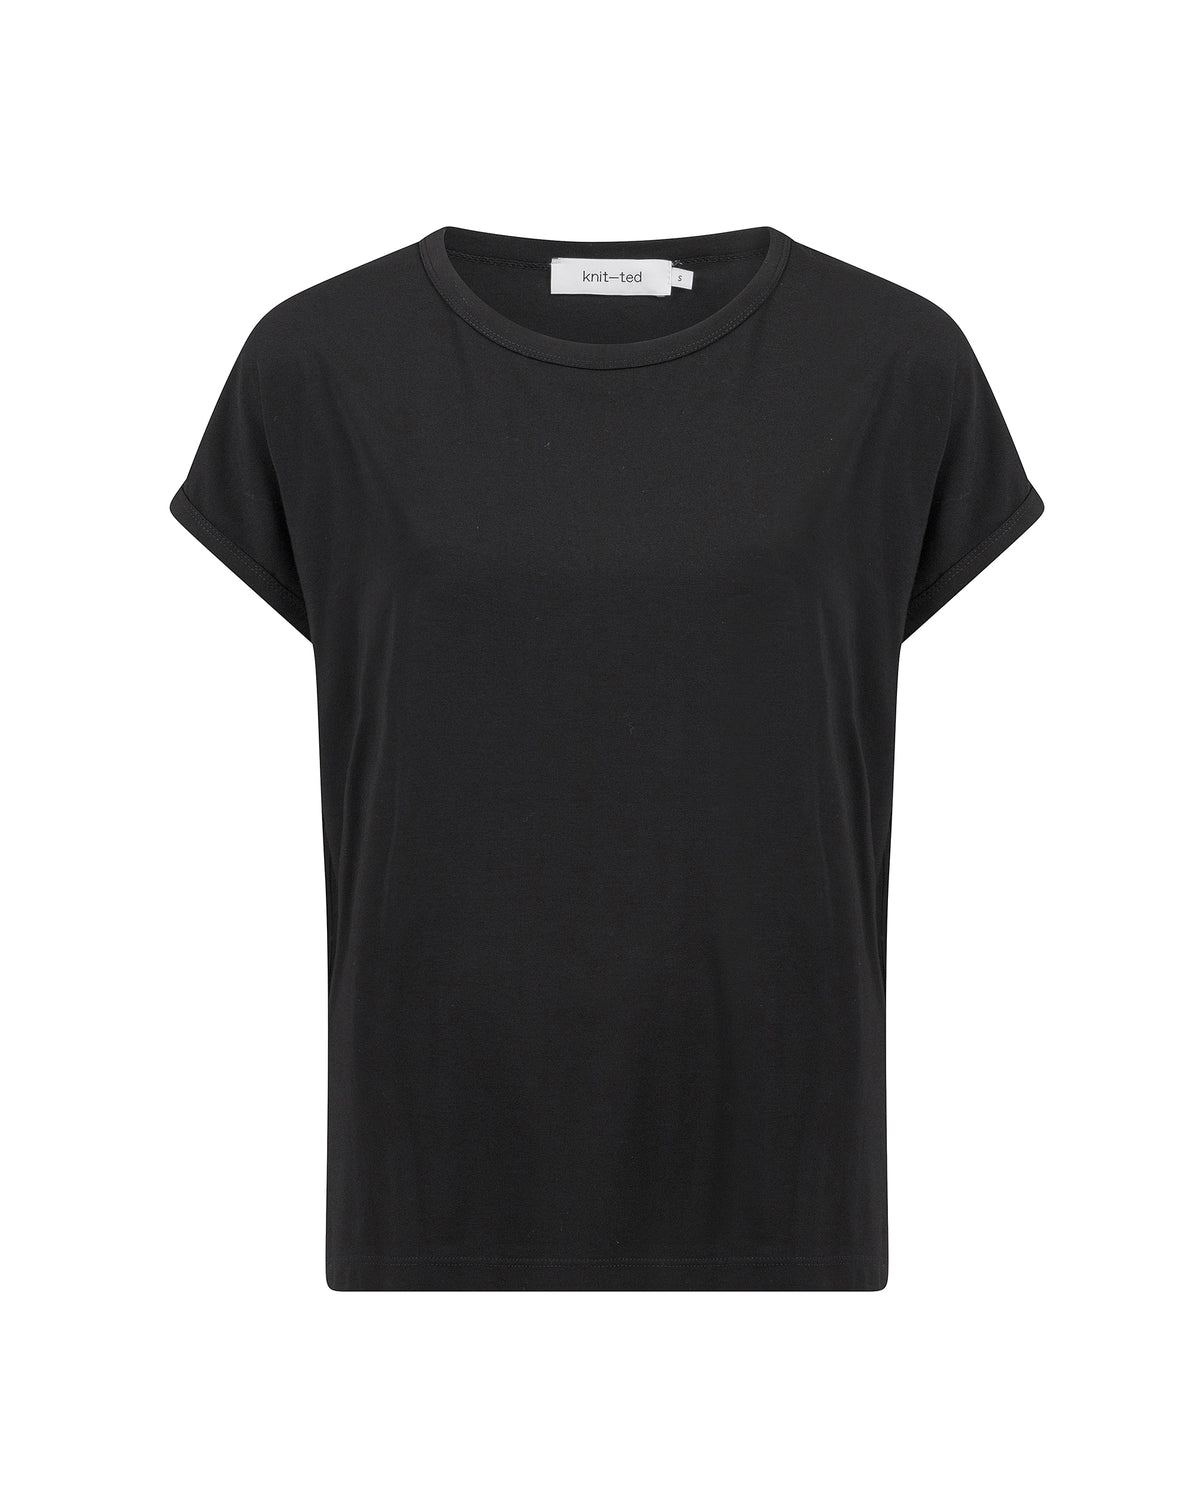 Emma T shirt Black